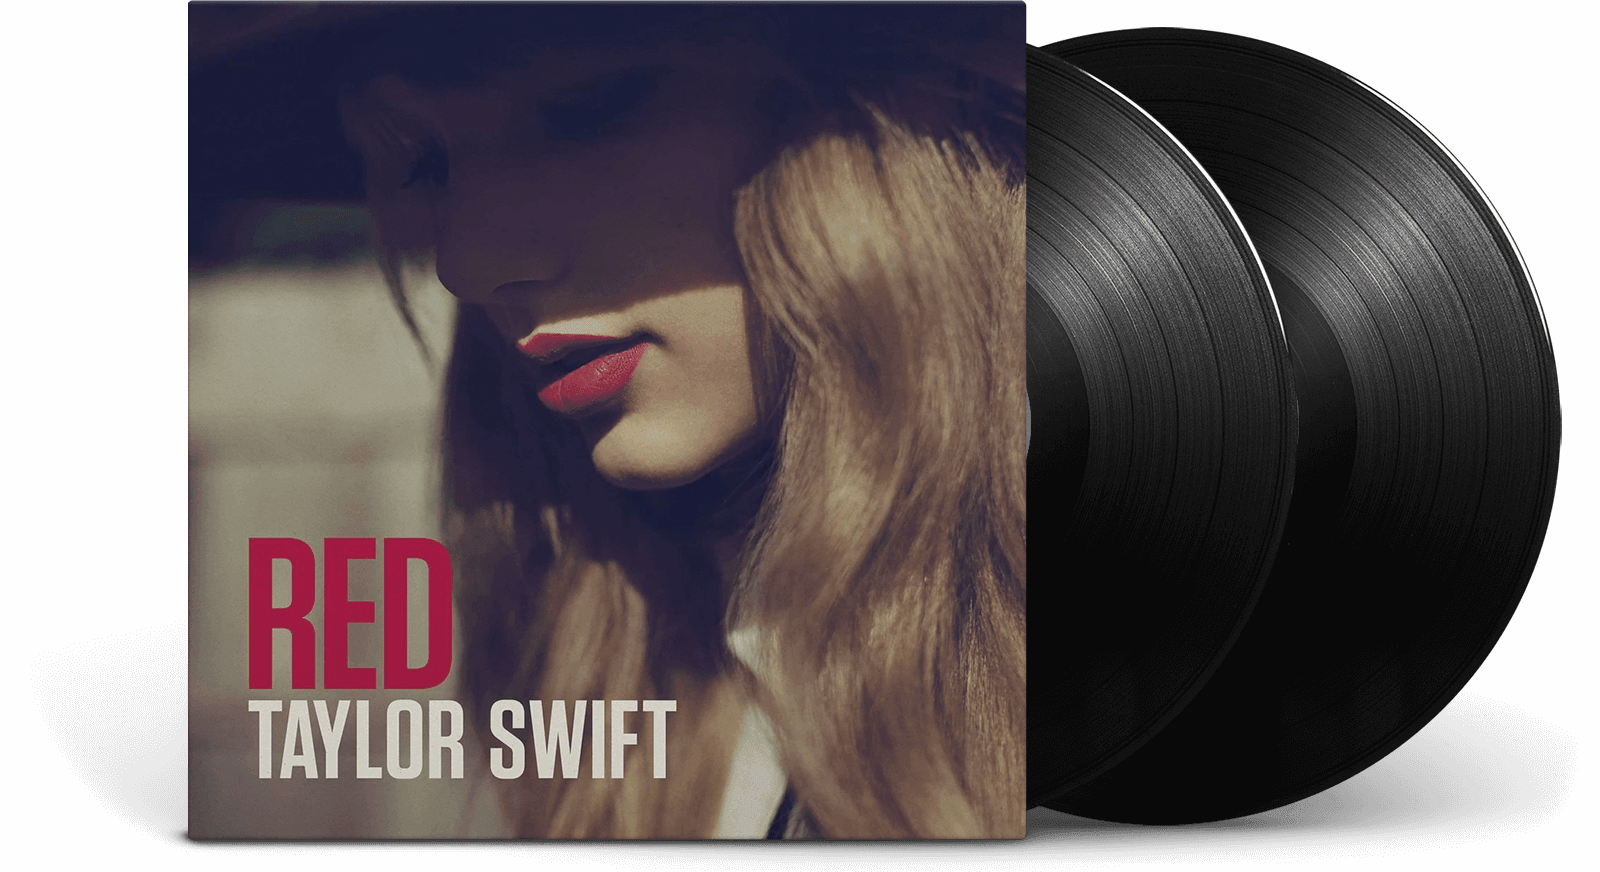 RED taylor swift vinyl lp new sealed 843930007103